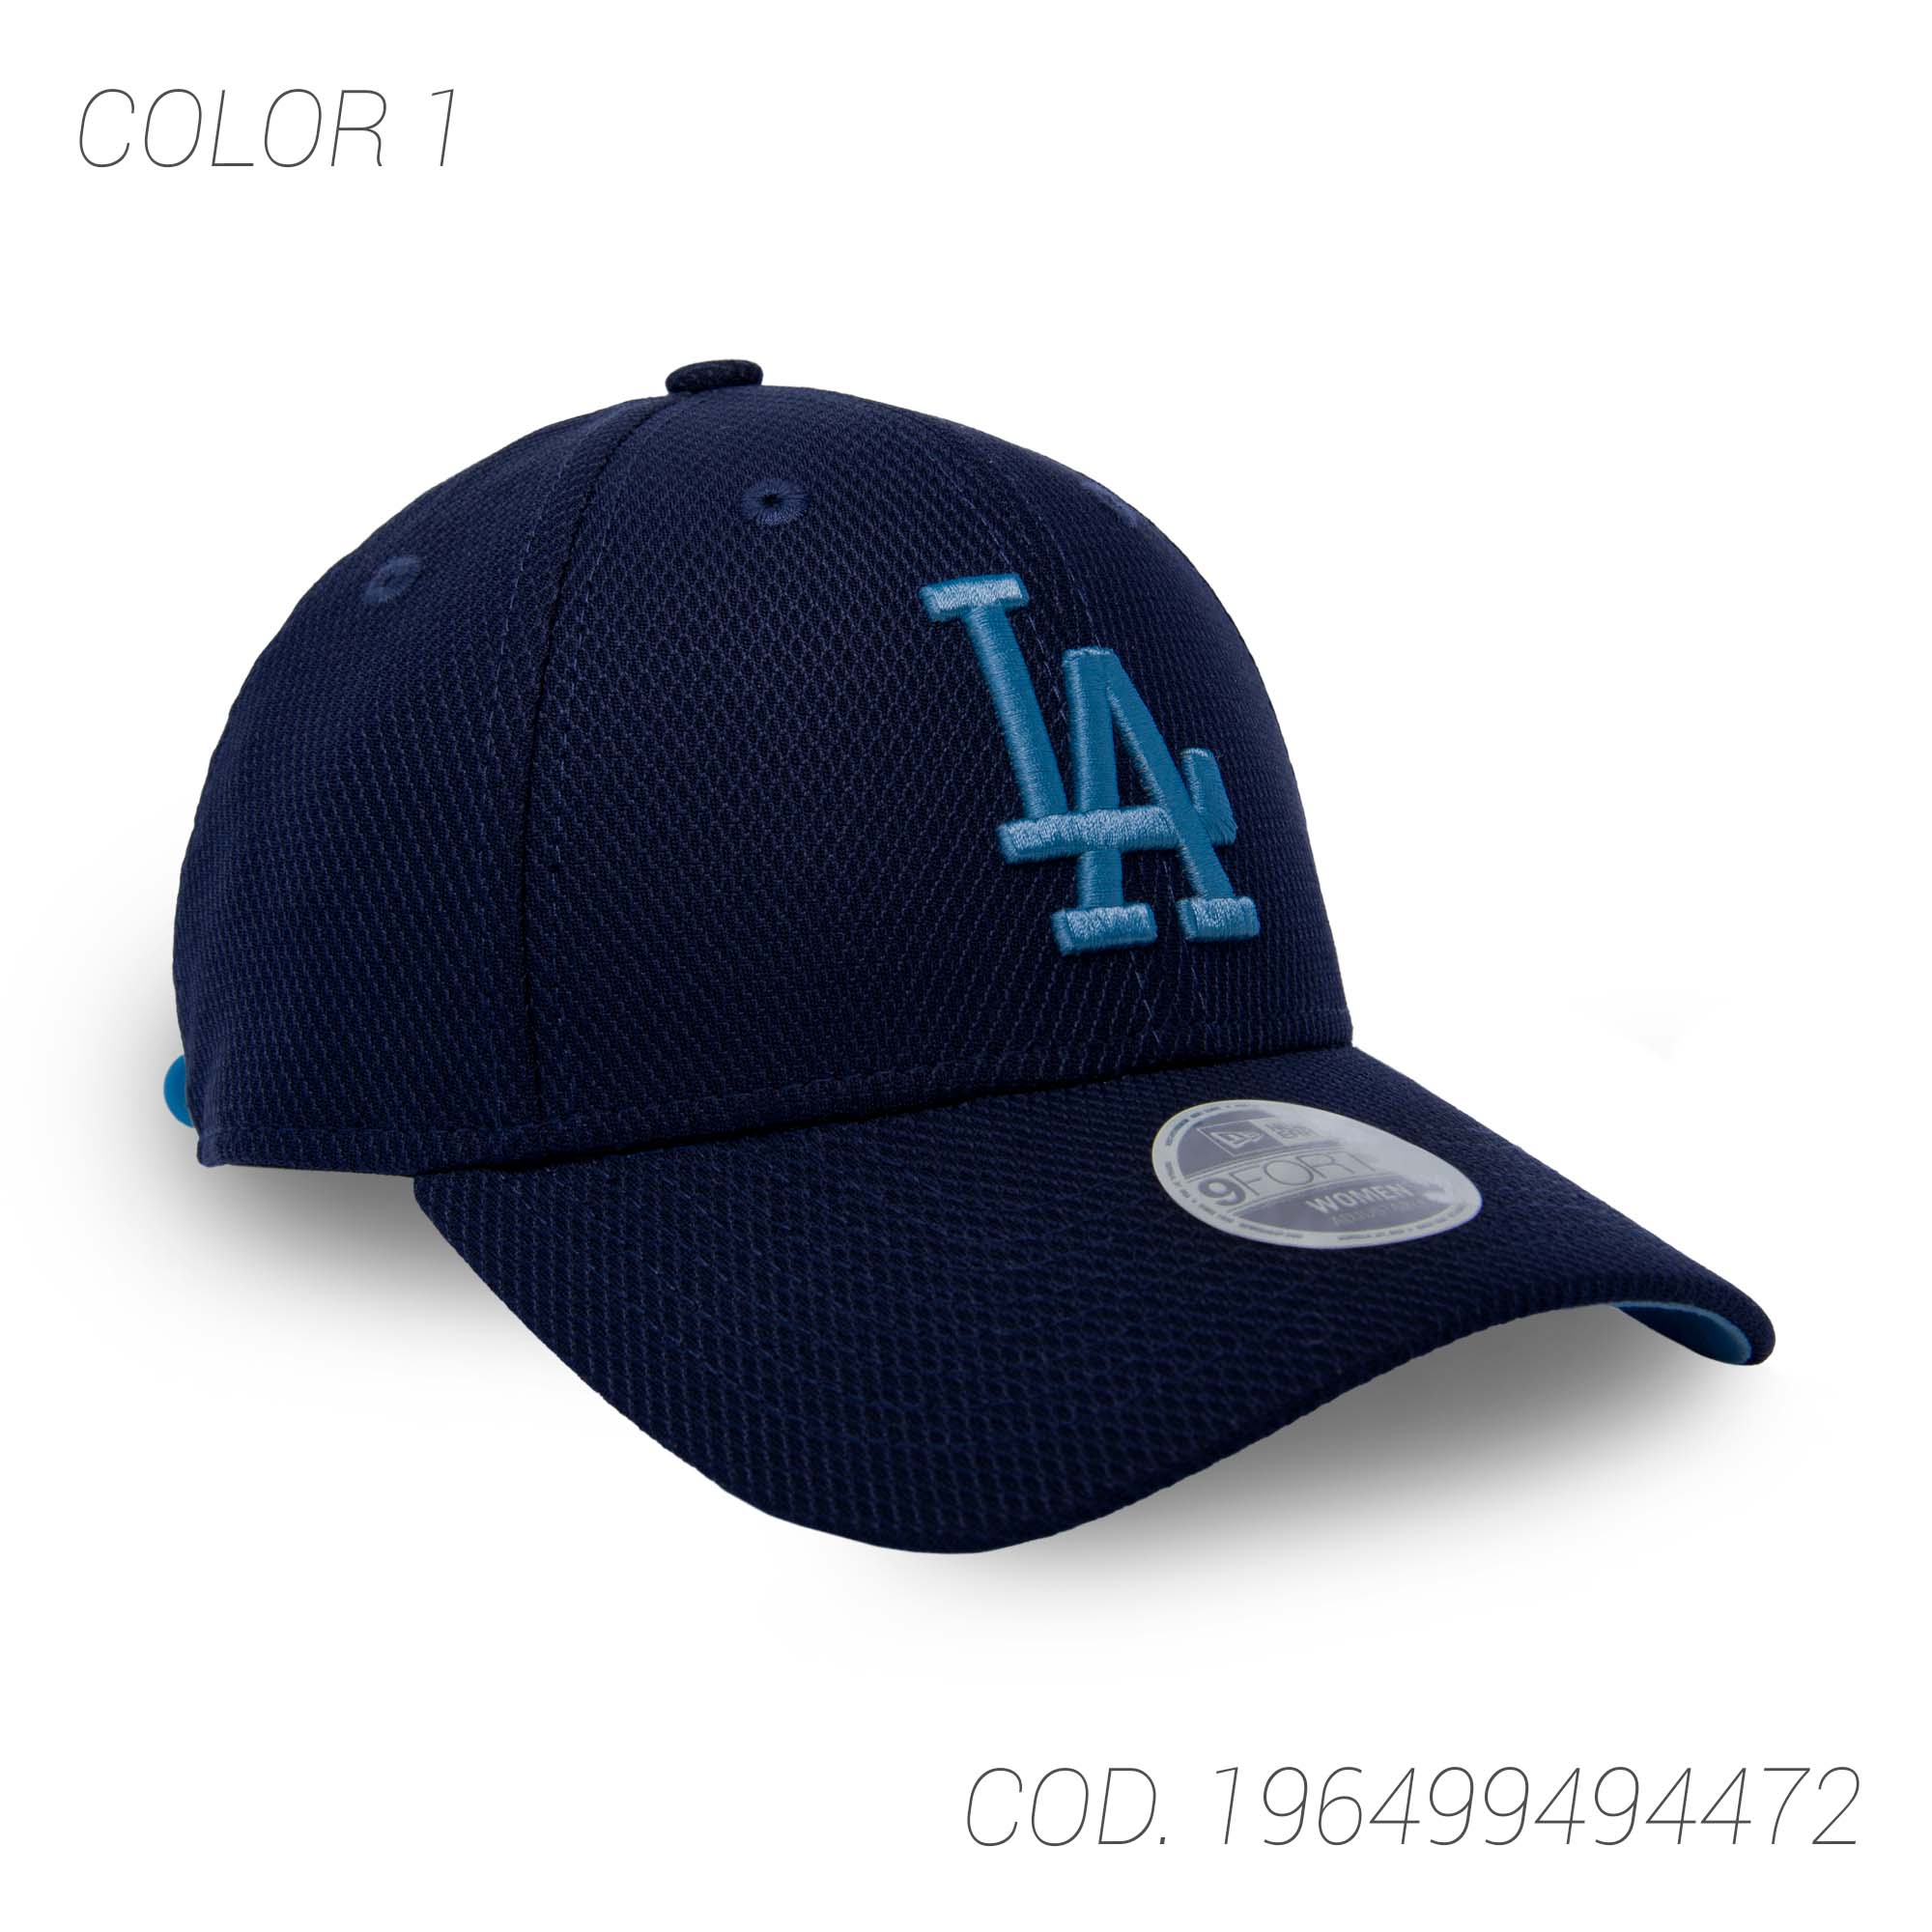 Gorra New Era Mlb   Los Angeles Dodgers 9Forty 196499494472   1019562